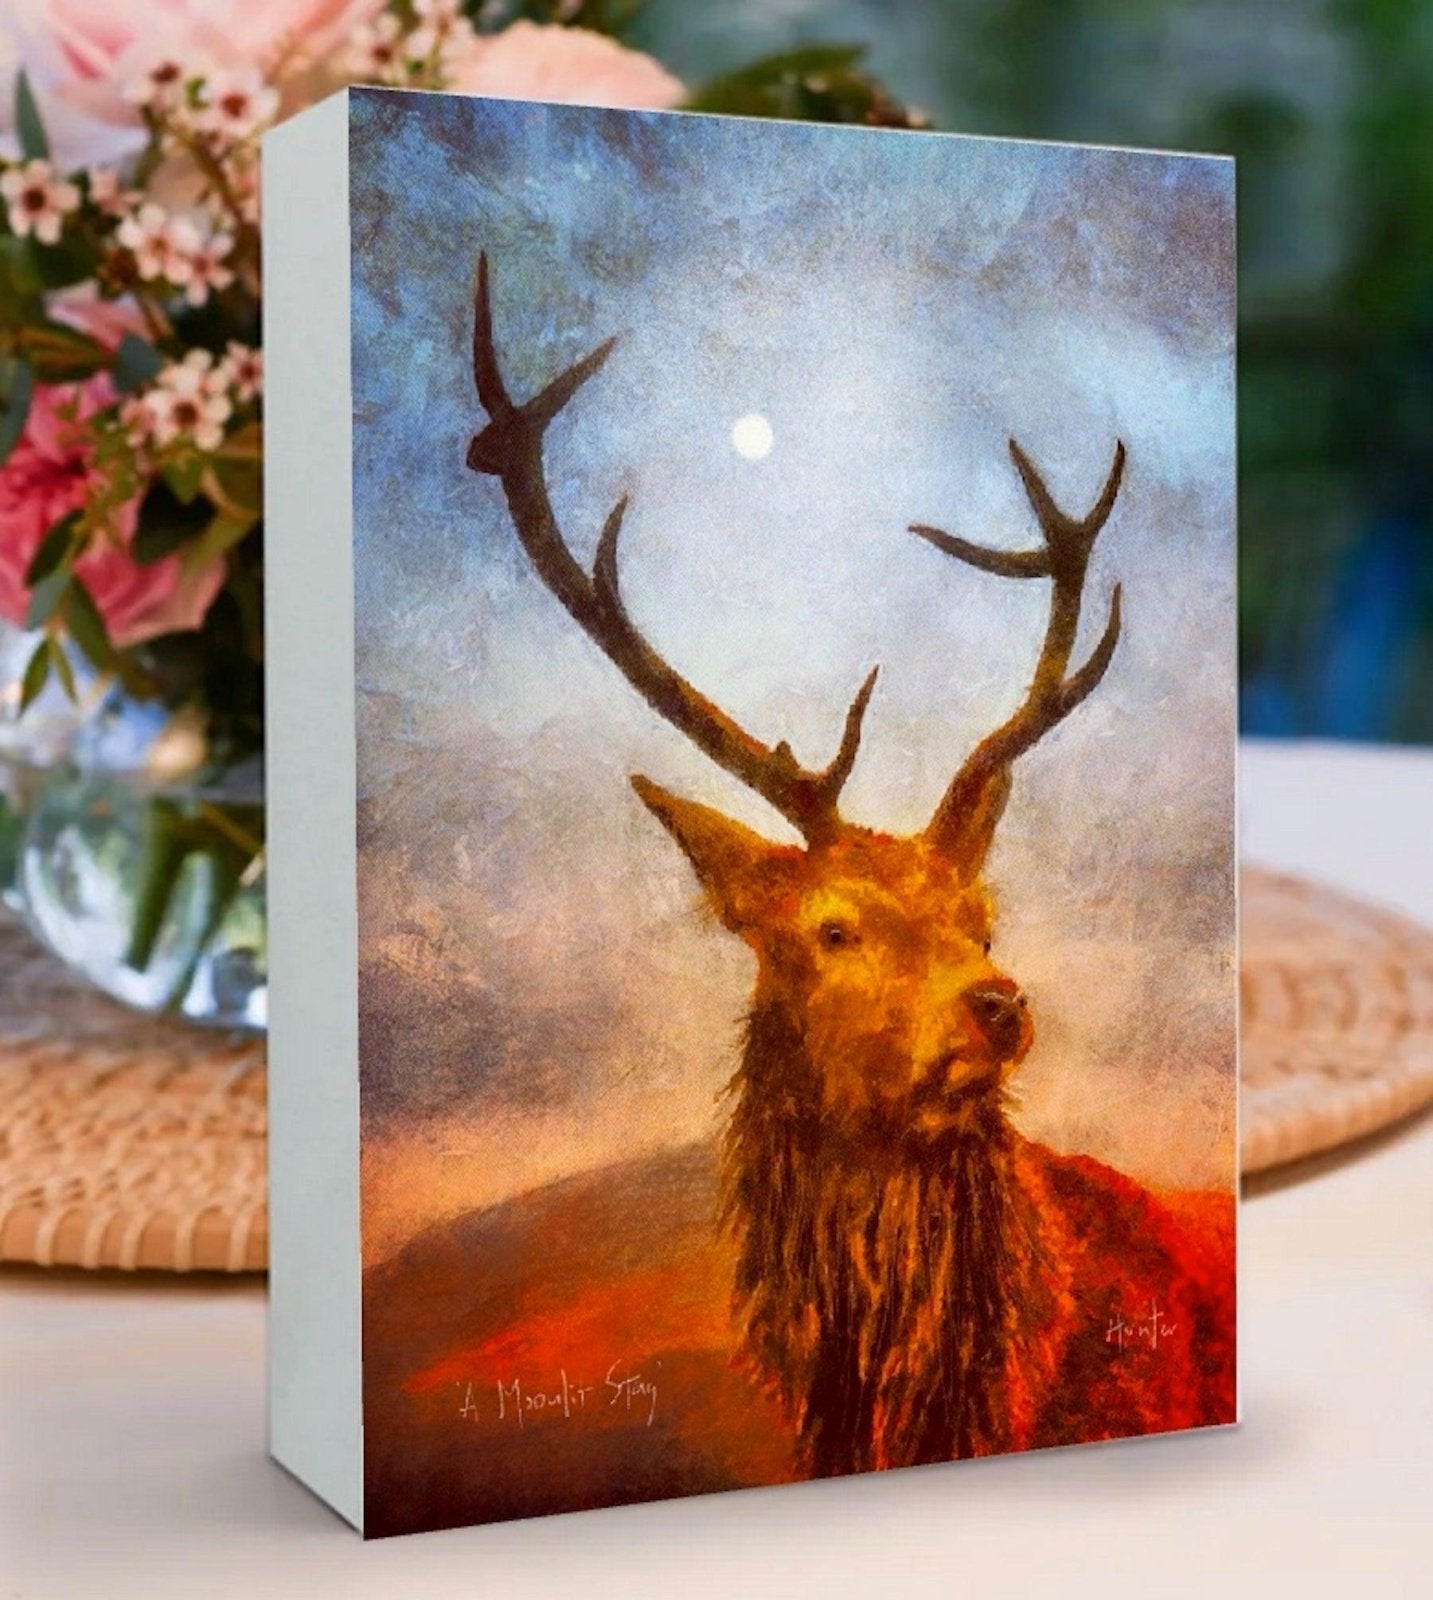 A Moonlit Highland Wood Wooden Art Block-Wooden Art Blocks-Scottish Highlands & Lowlands Art Gallery-Paintings, Prints, Homeware, Art Gifts From Scotland By Scottish Artist Kevin Hunter